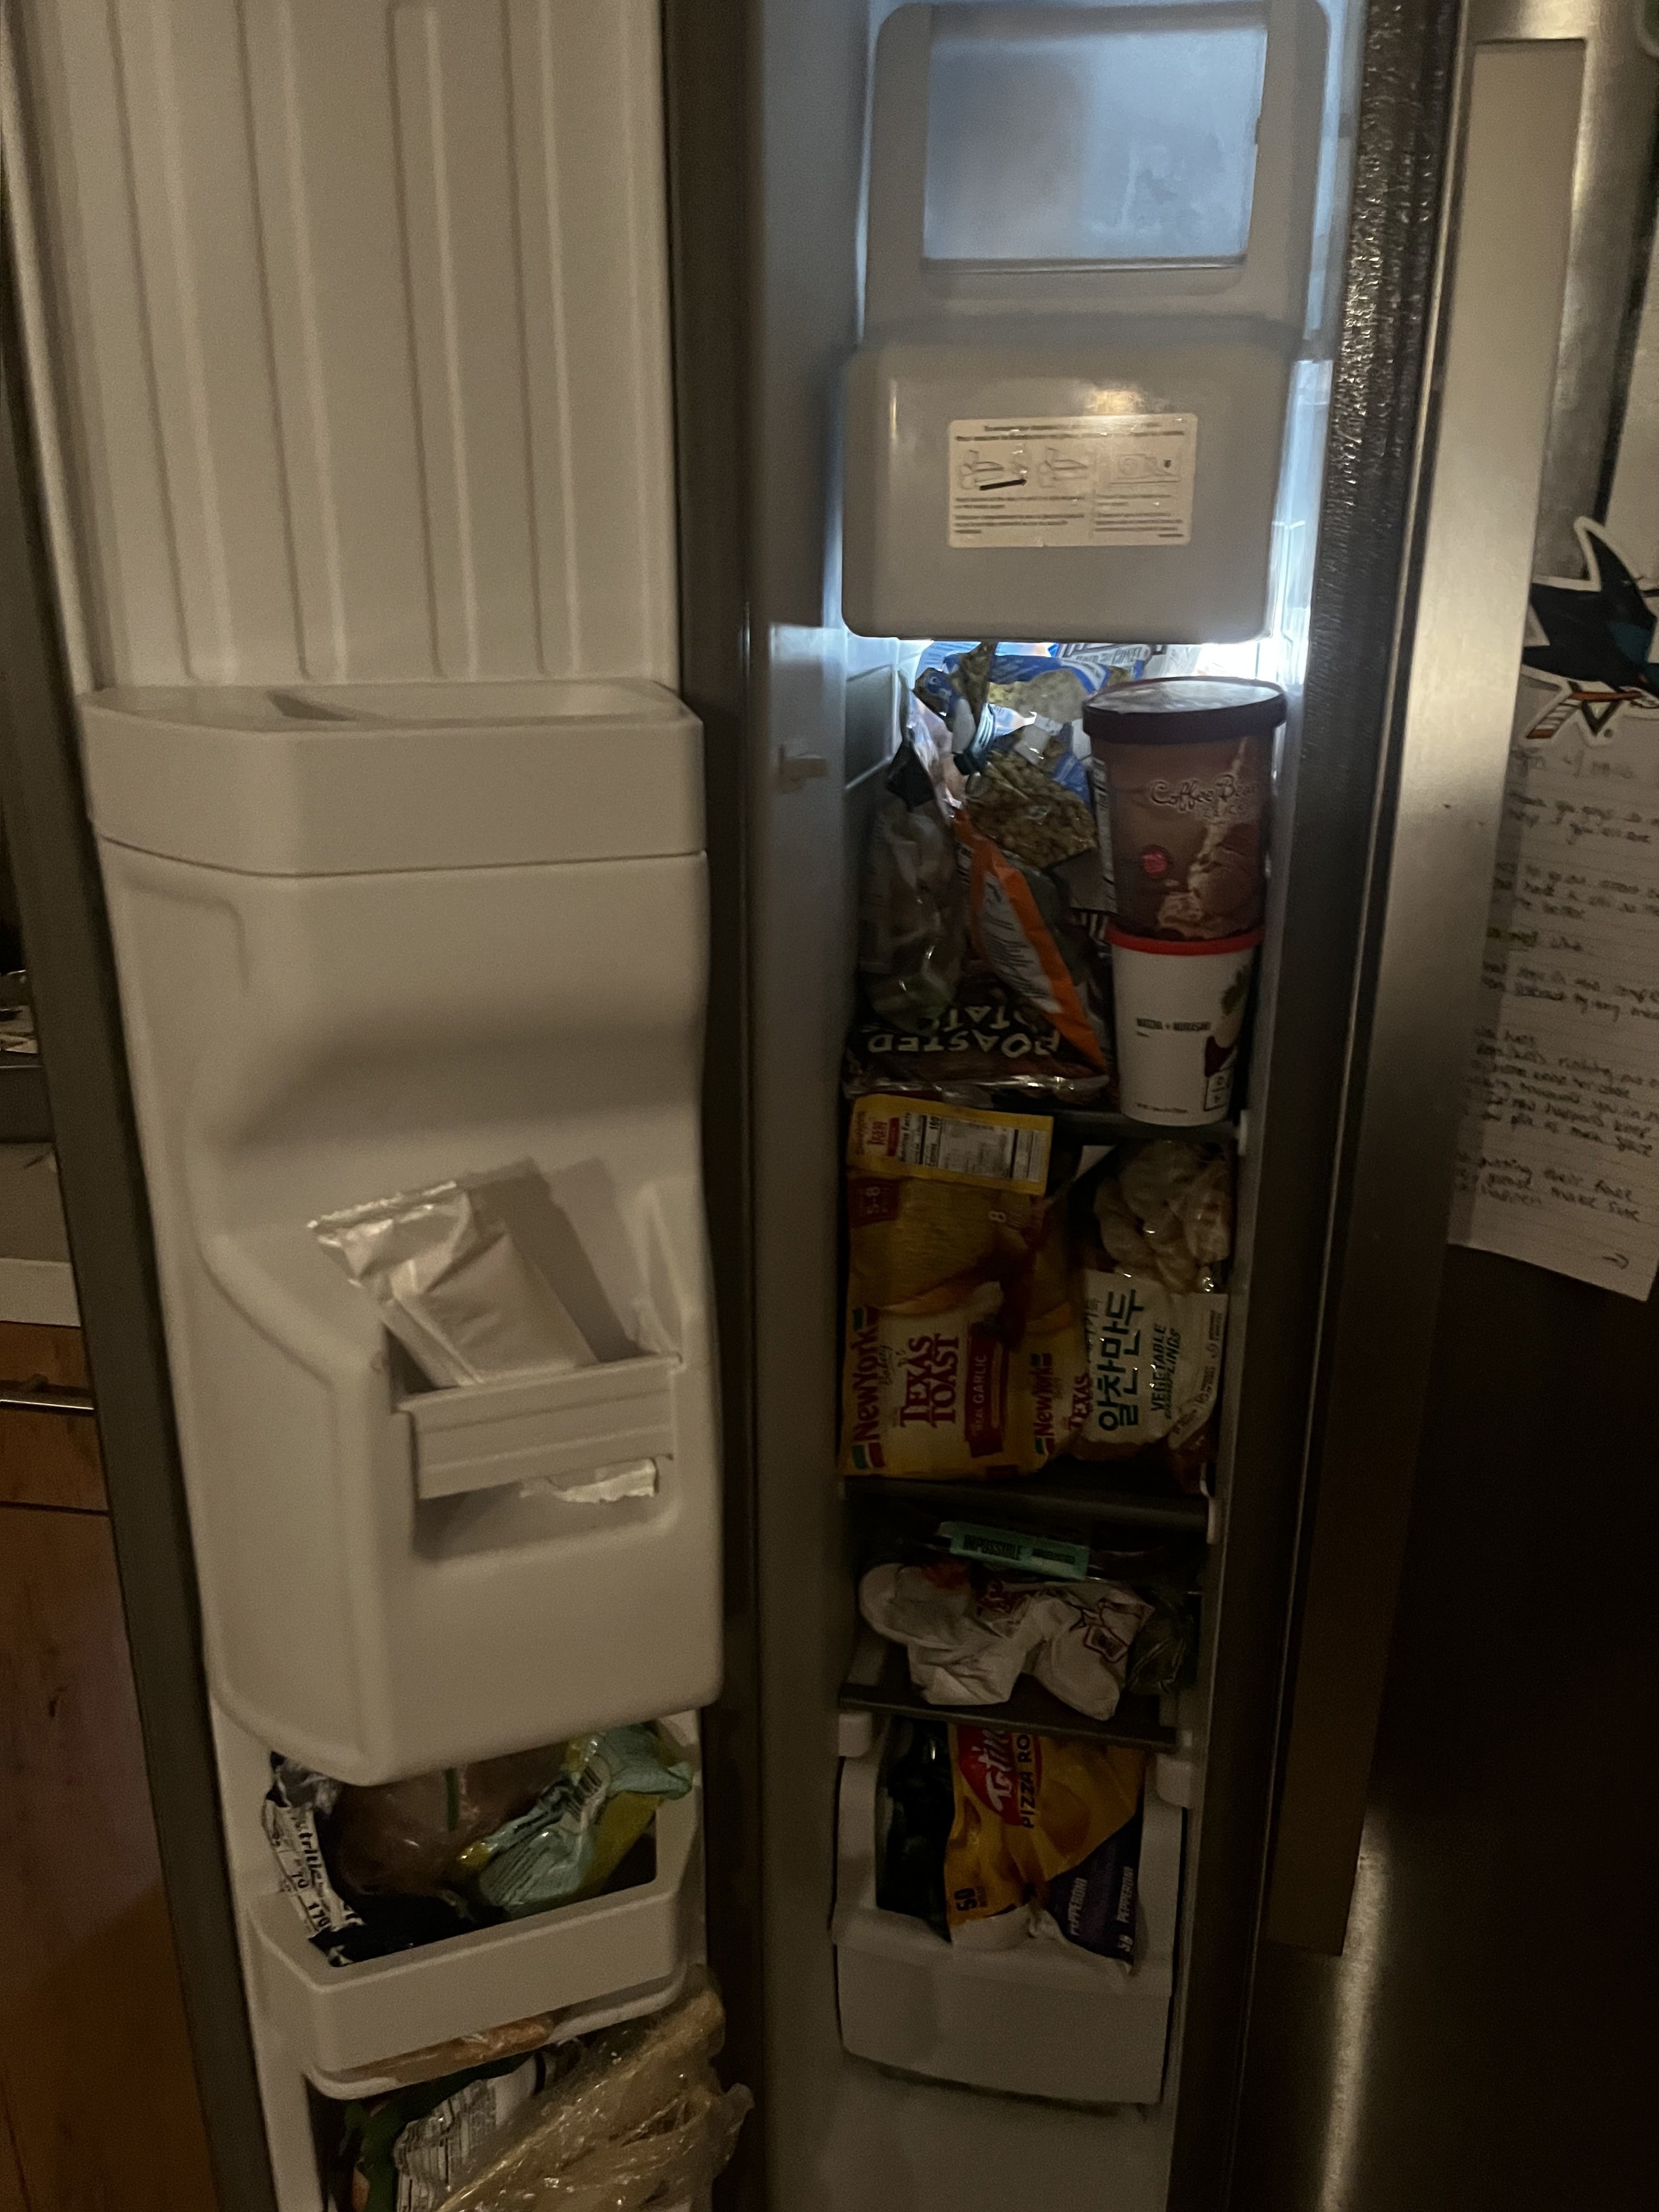 A freezer filled full